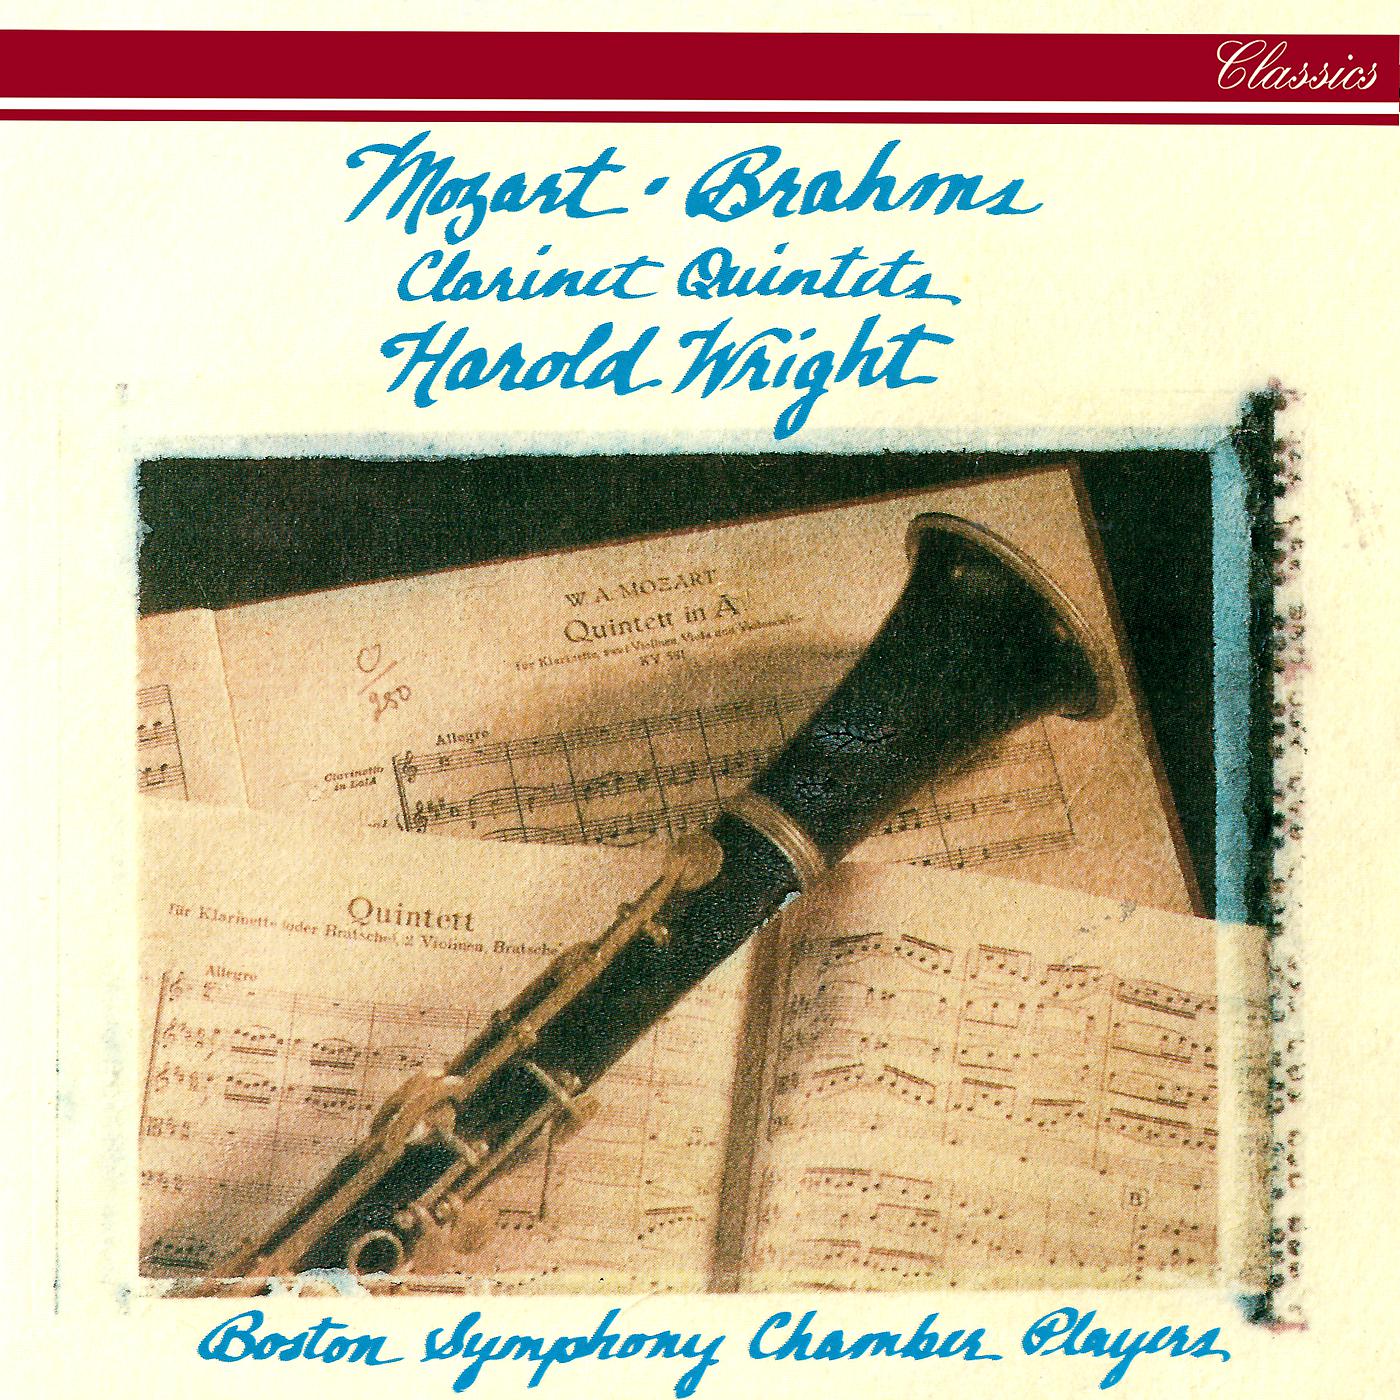 Постер альбома Mozart & Brahms: Clarinet Quintets